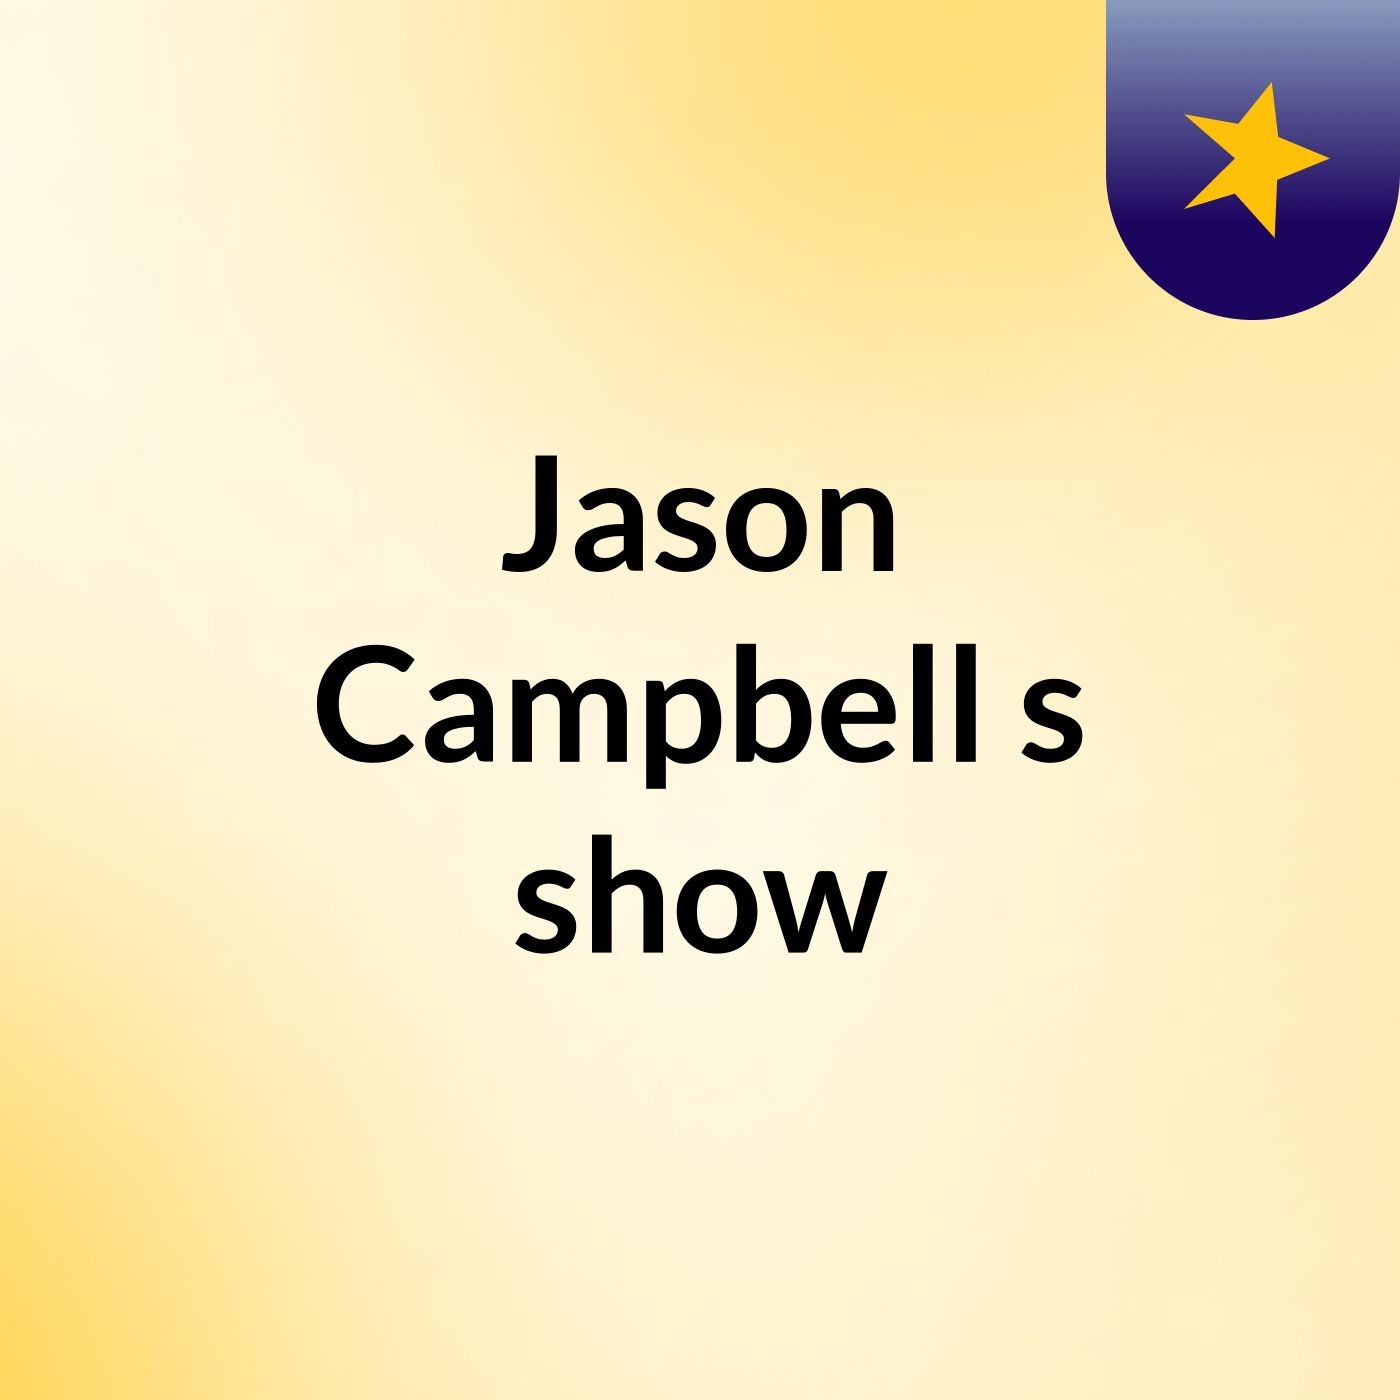 Jason Campbell's show